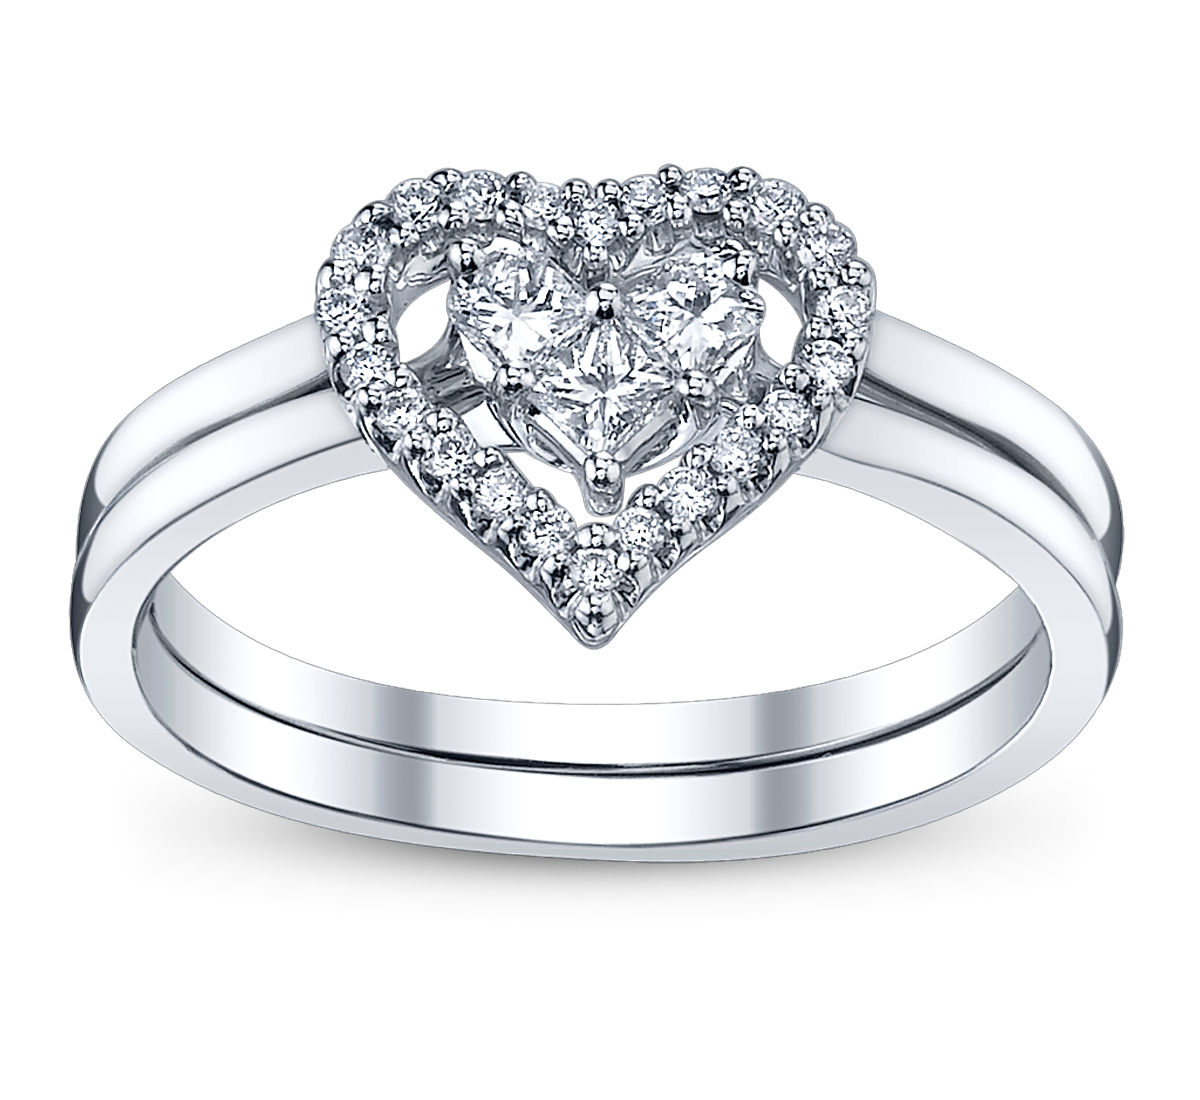 Picture #477831 - clipart diamond engagement ring. clipart diamond engageme...